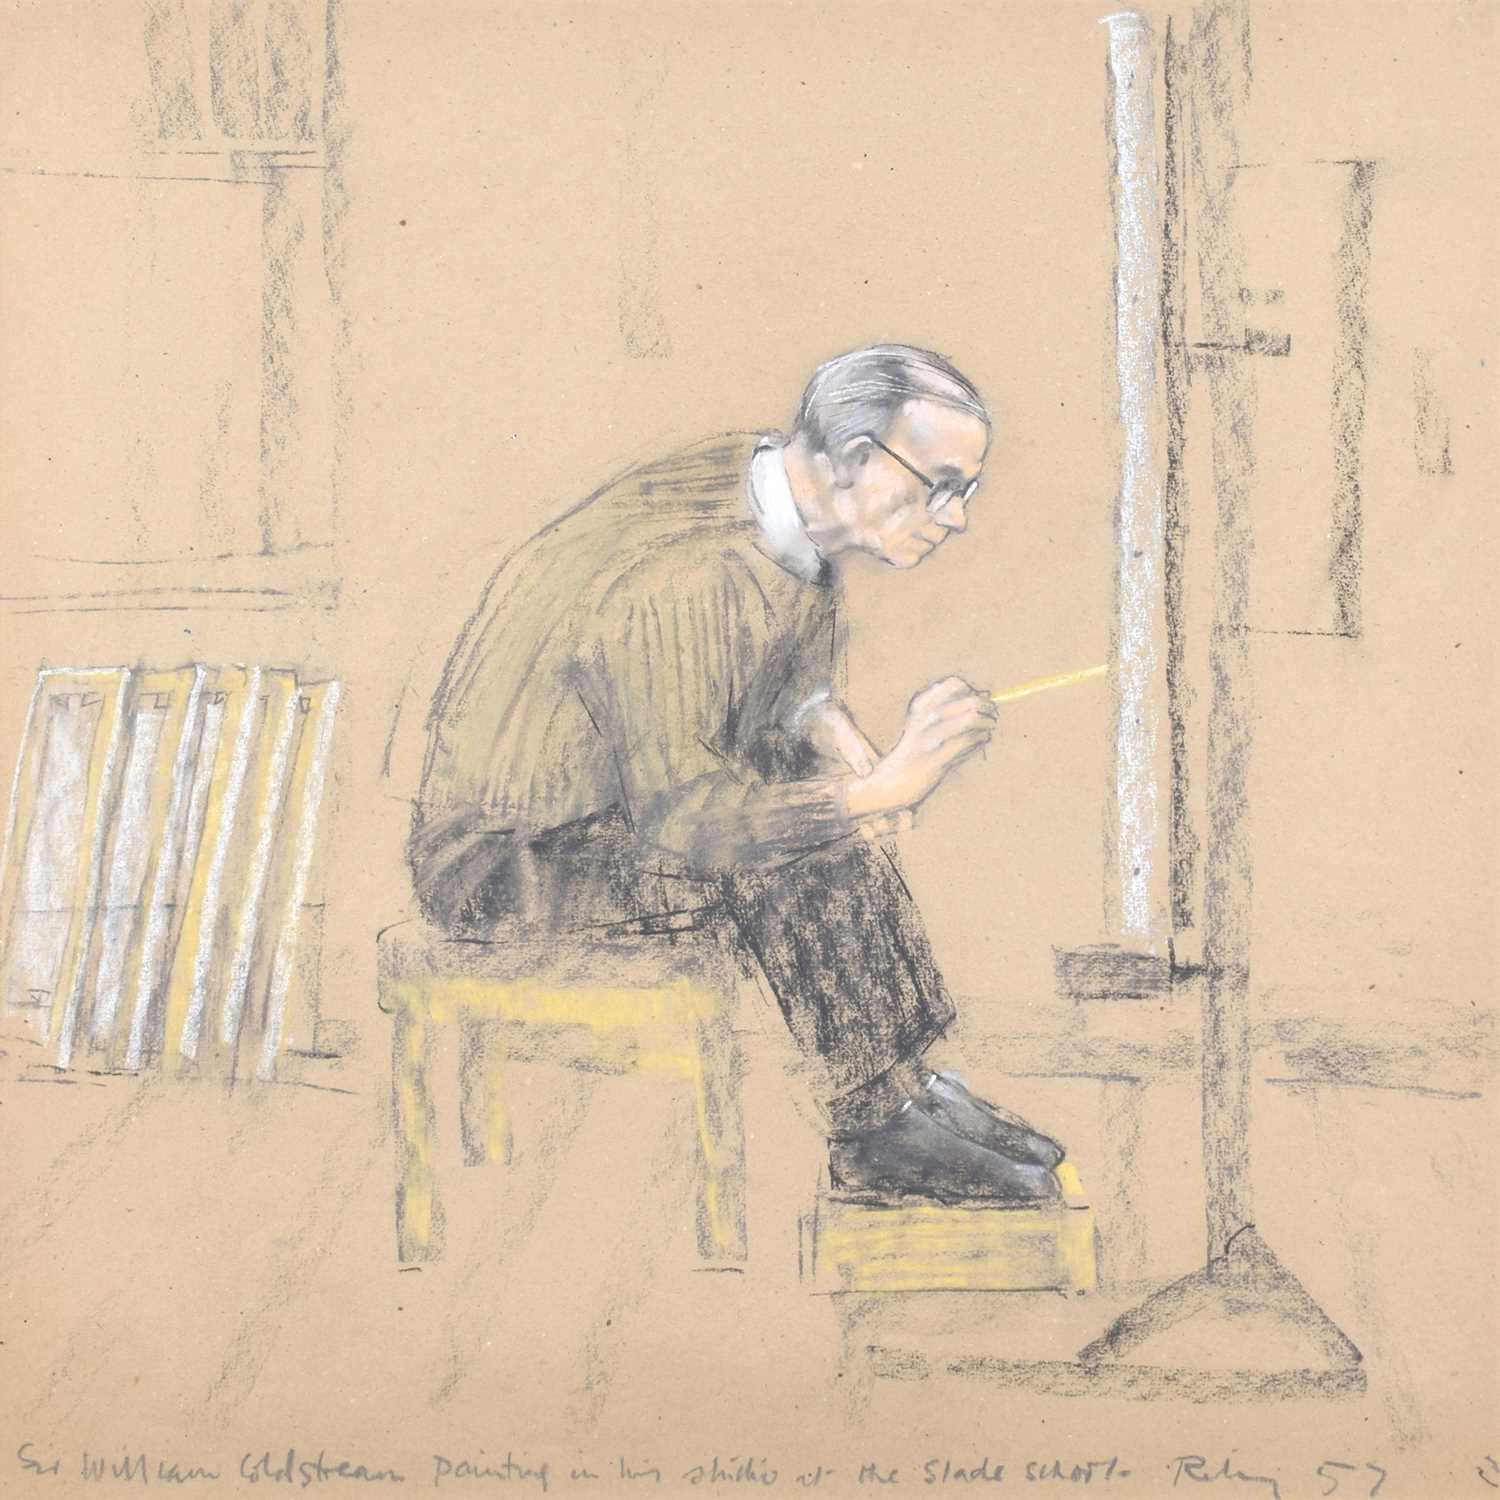 Harold Riley (British 1934-2023) "Sir William Coldstream painting in his studio at the Slade School"